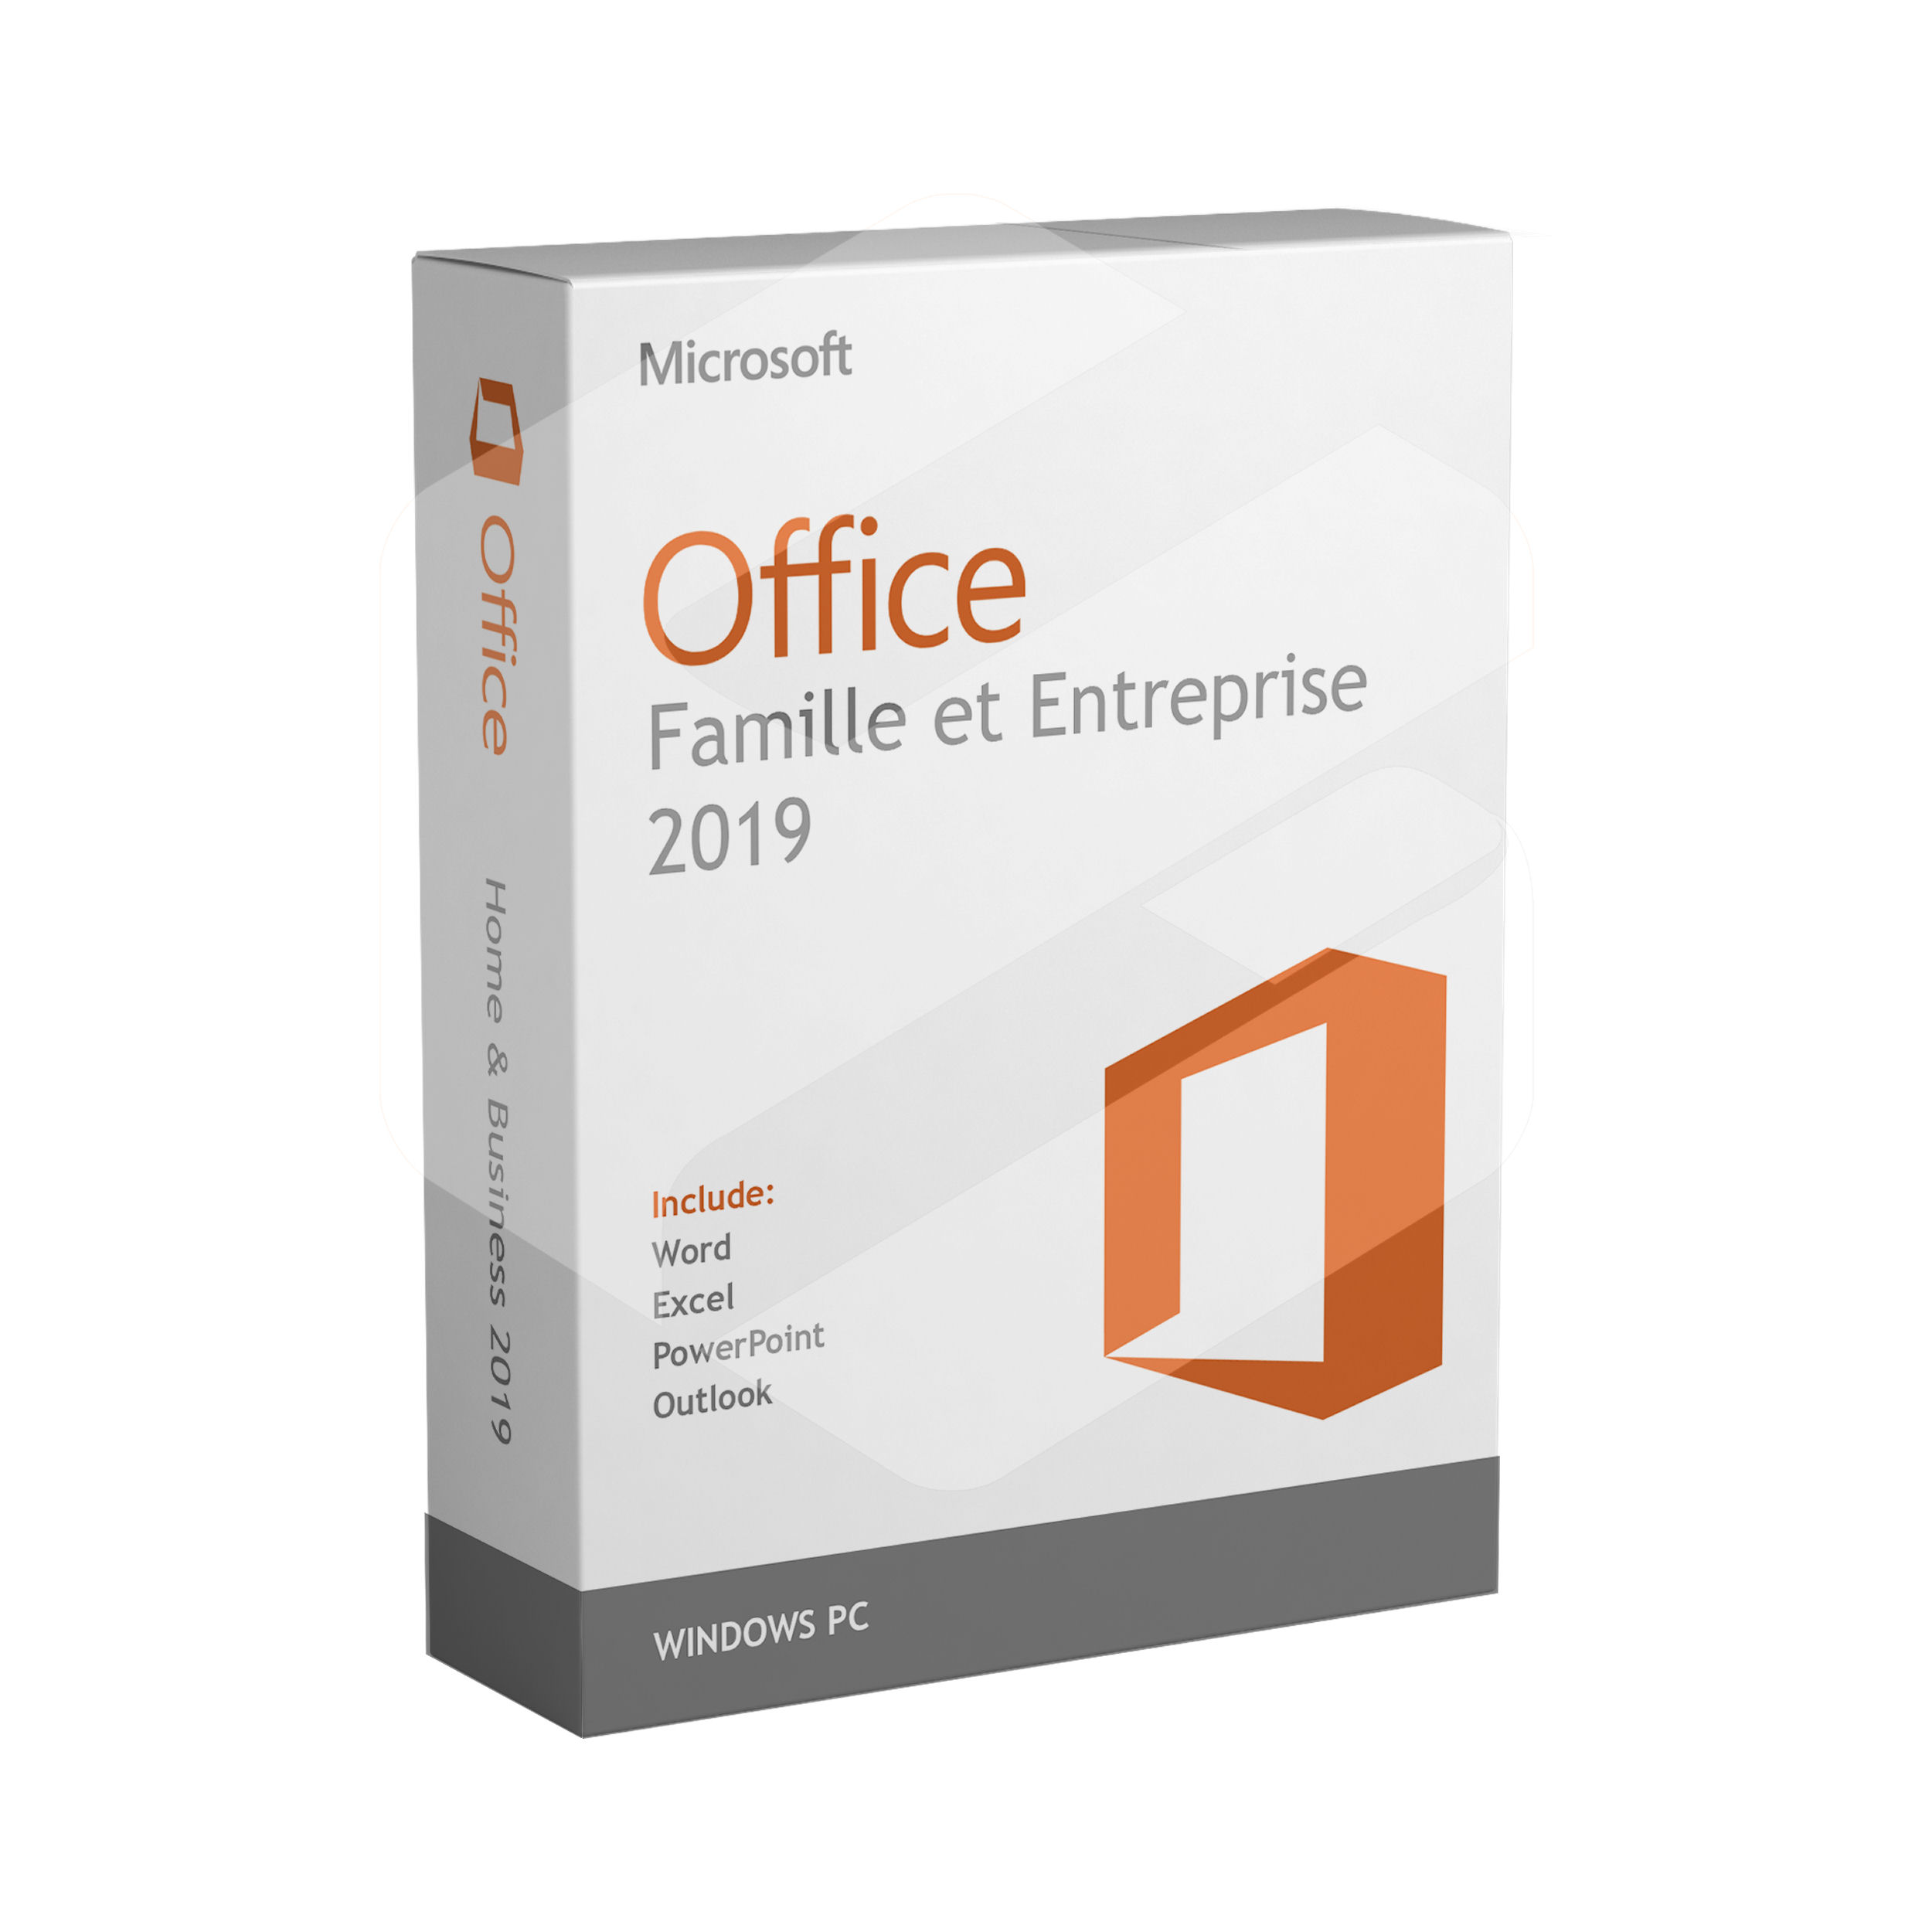 Microsoft Office 2019 Famille et Petite Entreprise